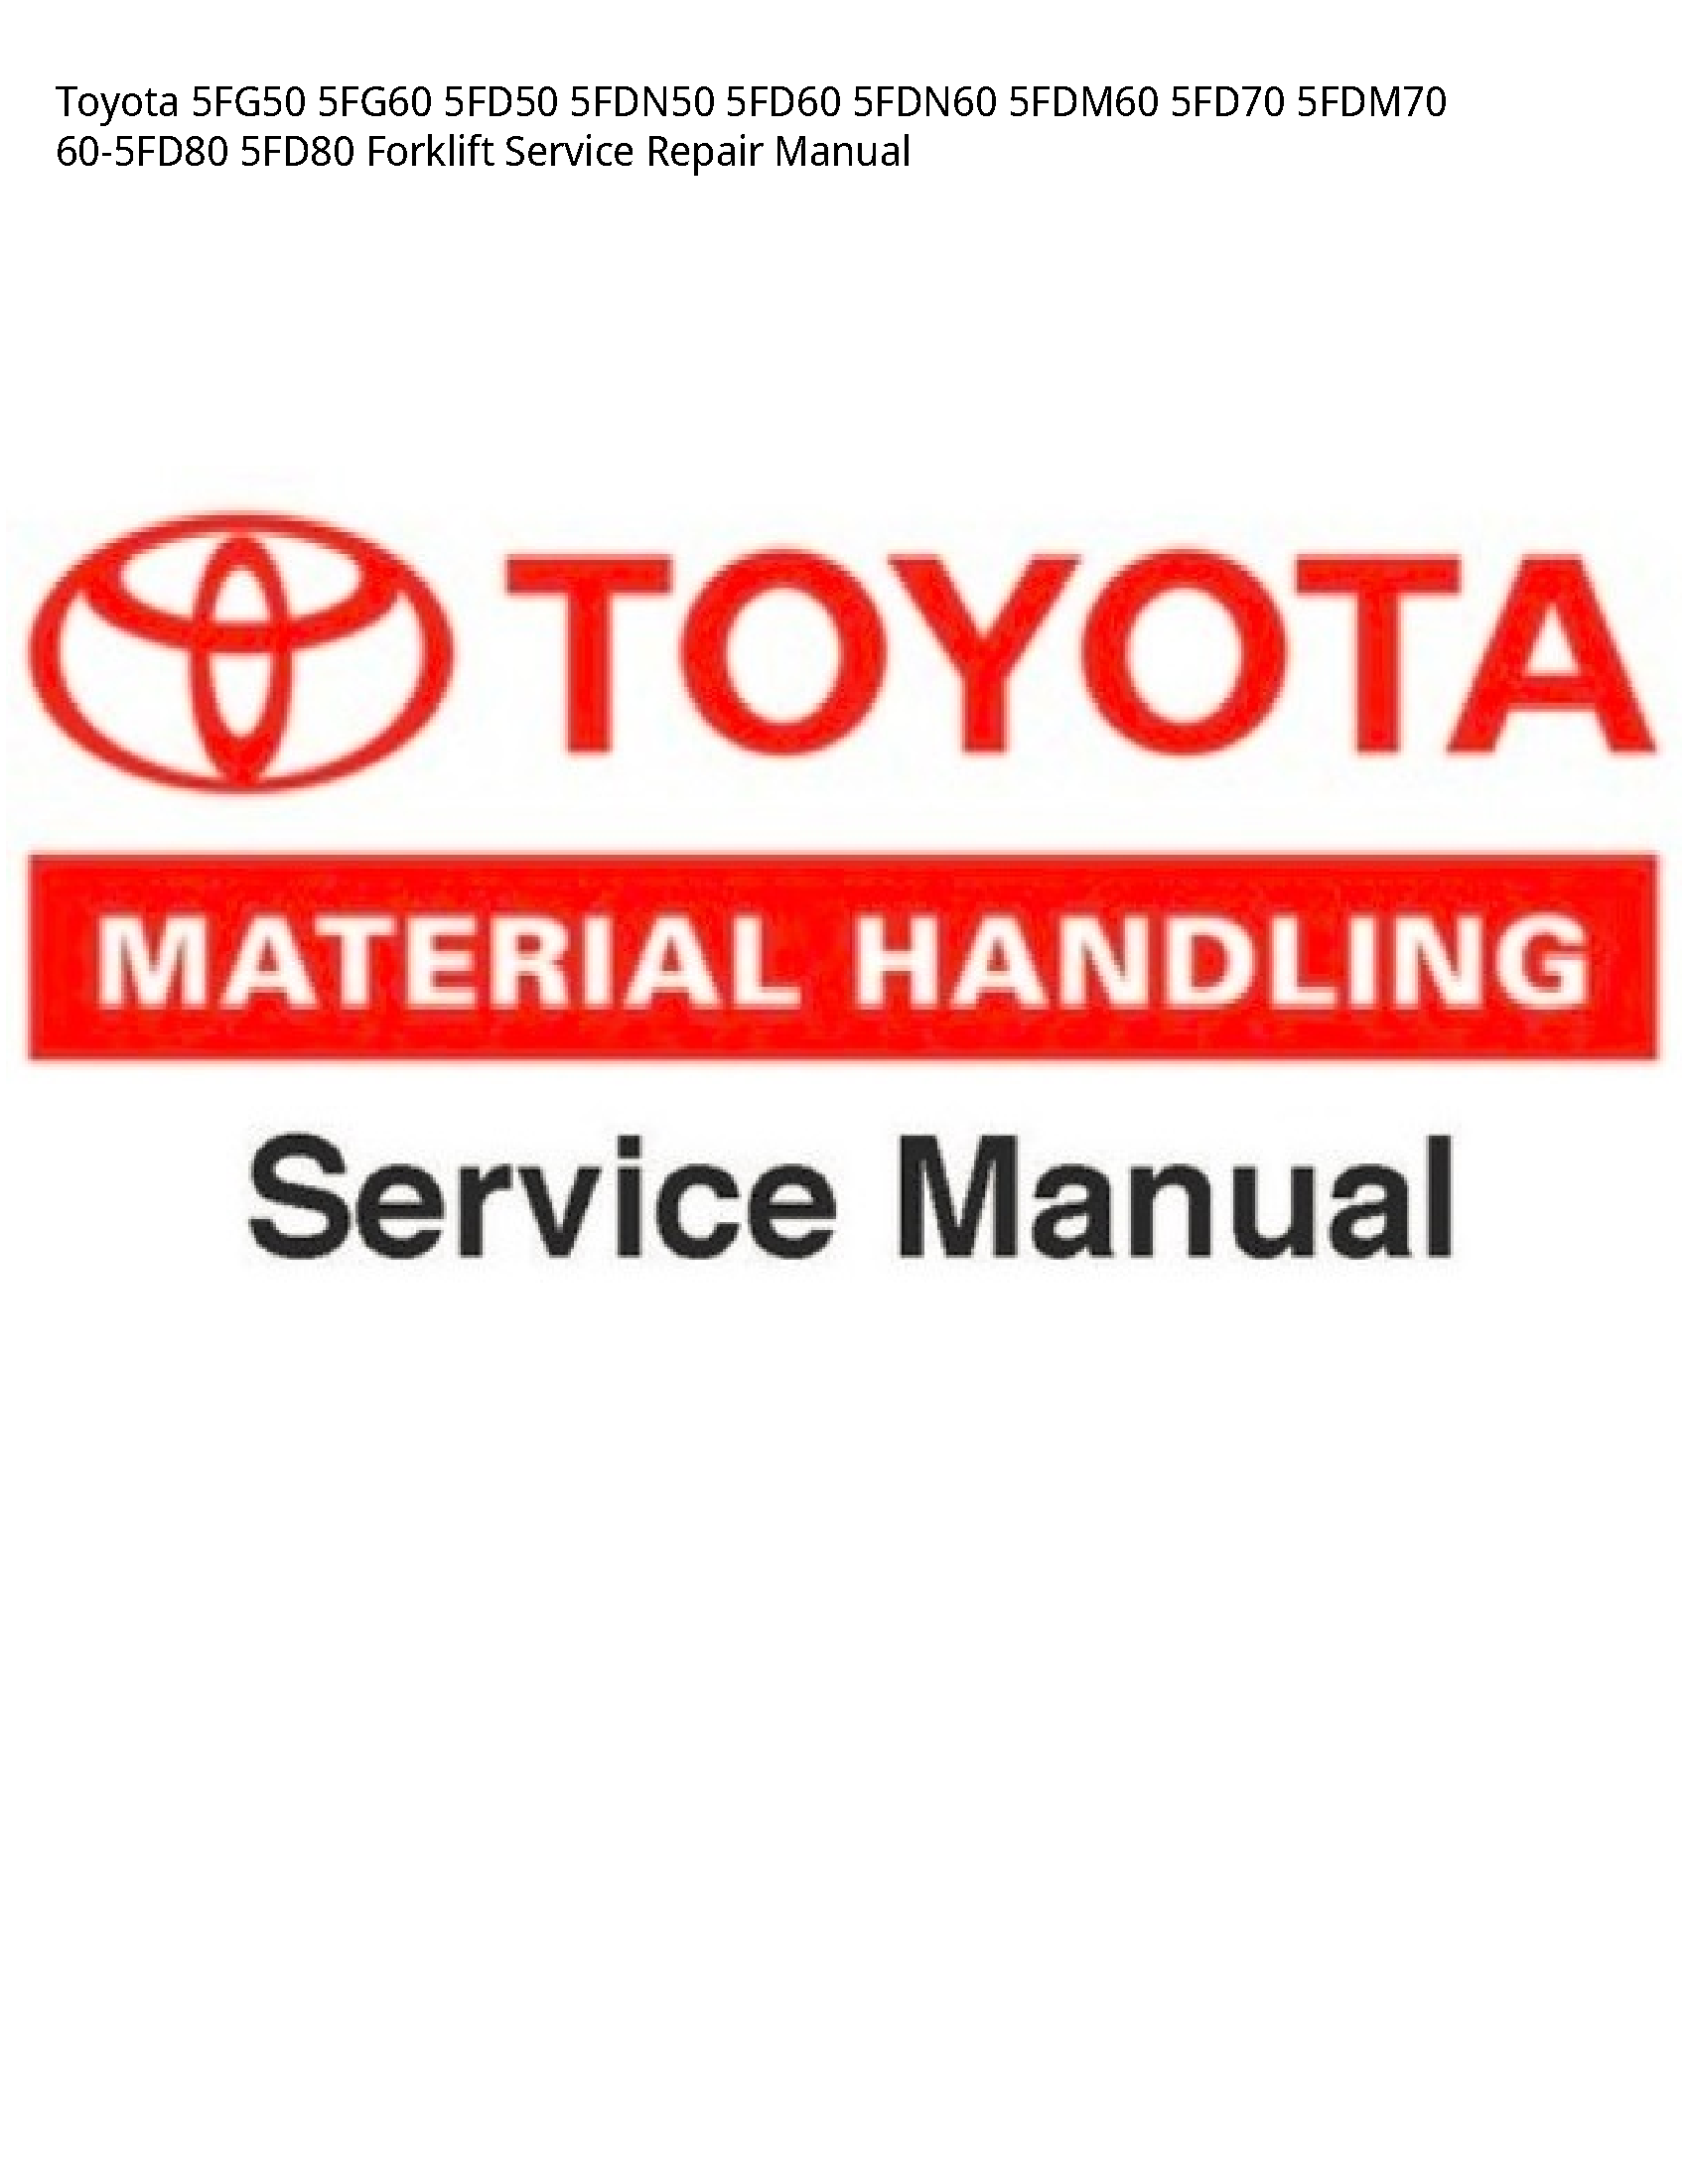 Toyota 5FG50 Forklift manual